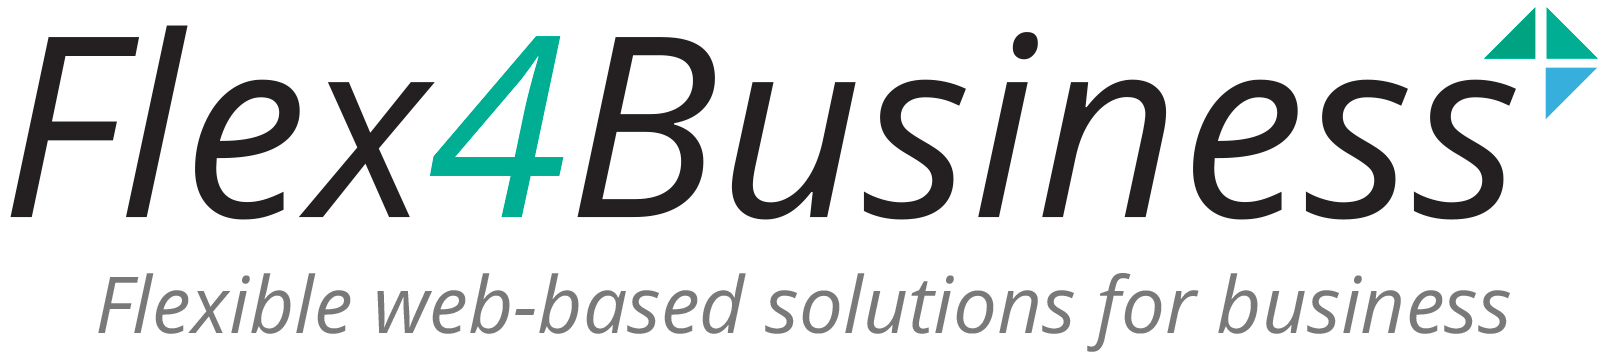 Flex4Business_Logo-m-tekst-stort